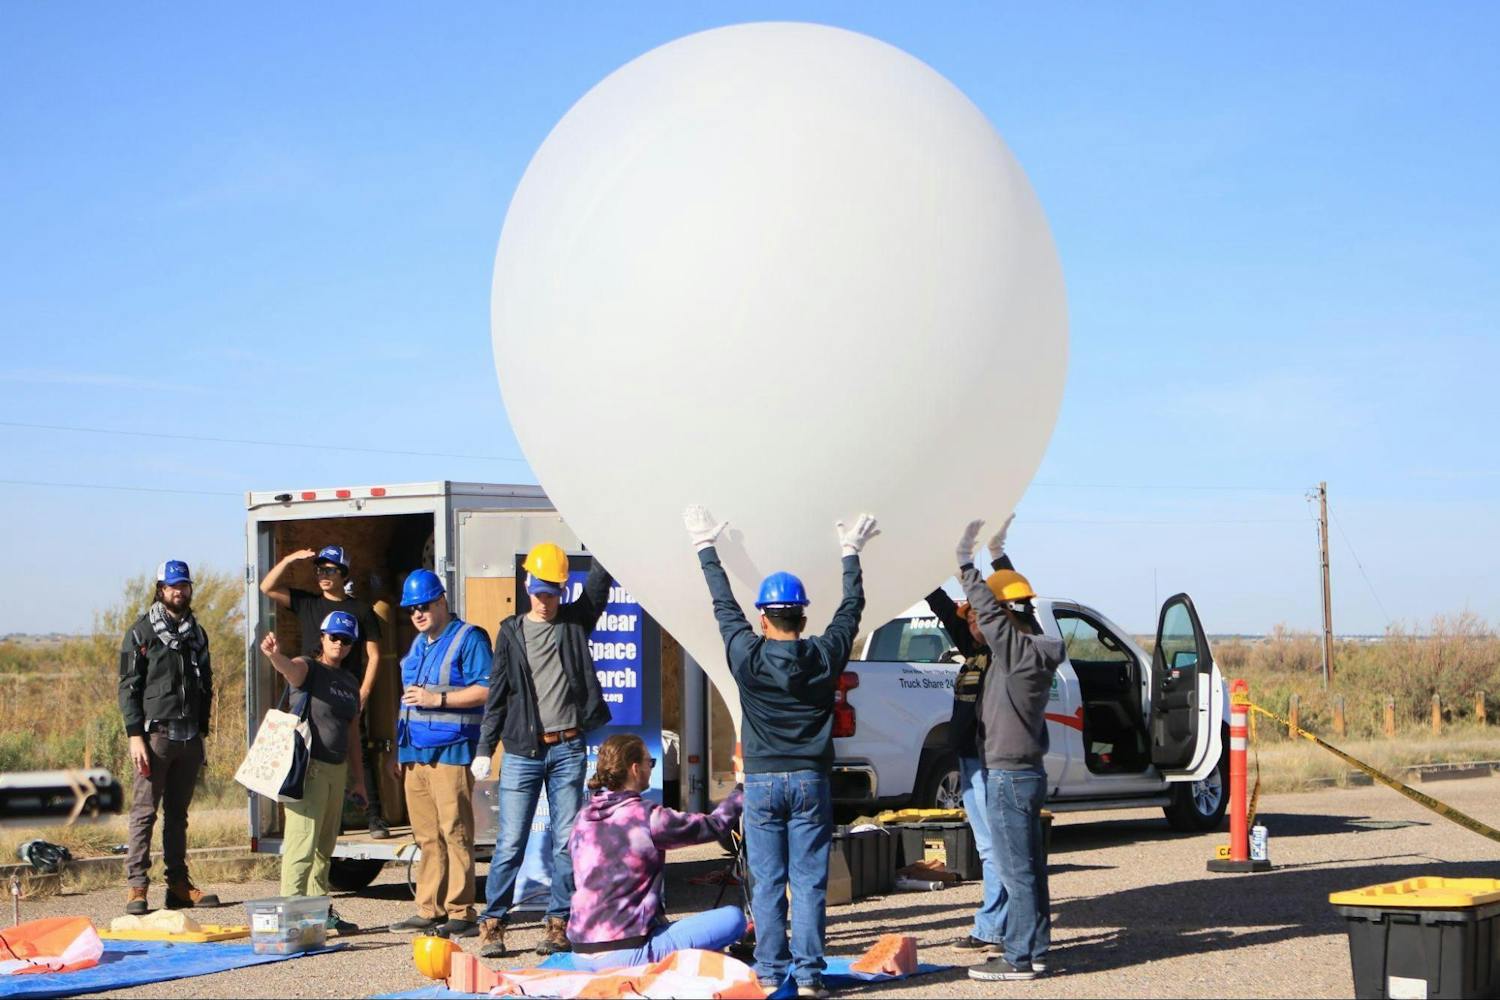 NASA Balloon image2.jpg